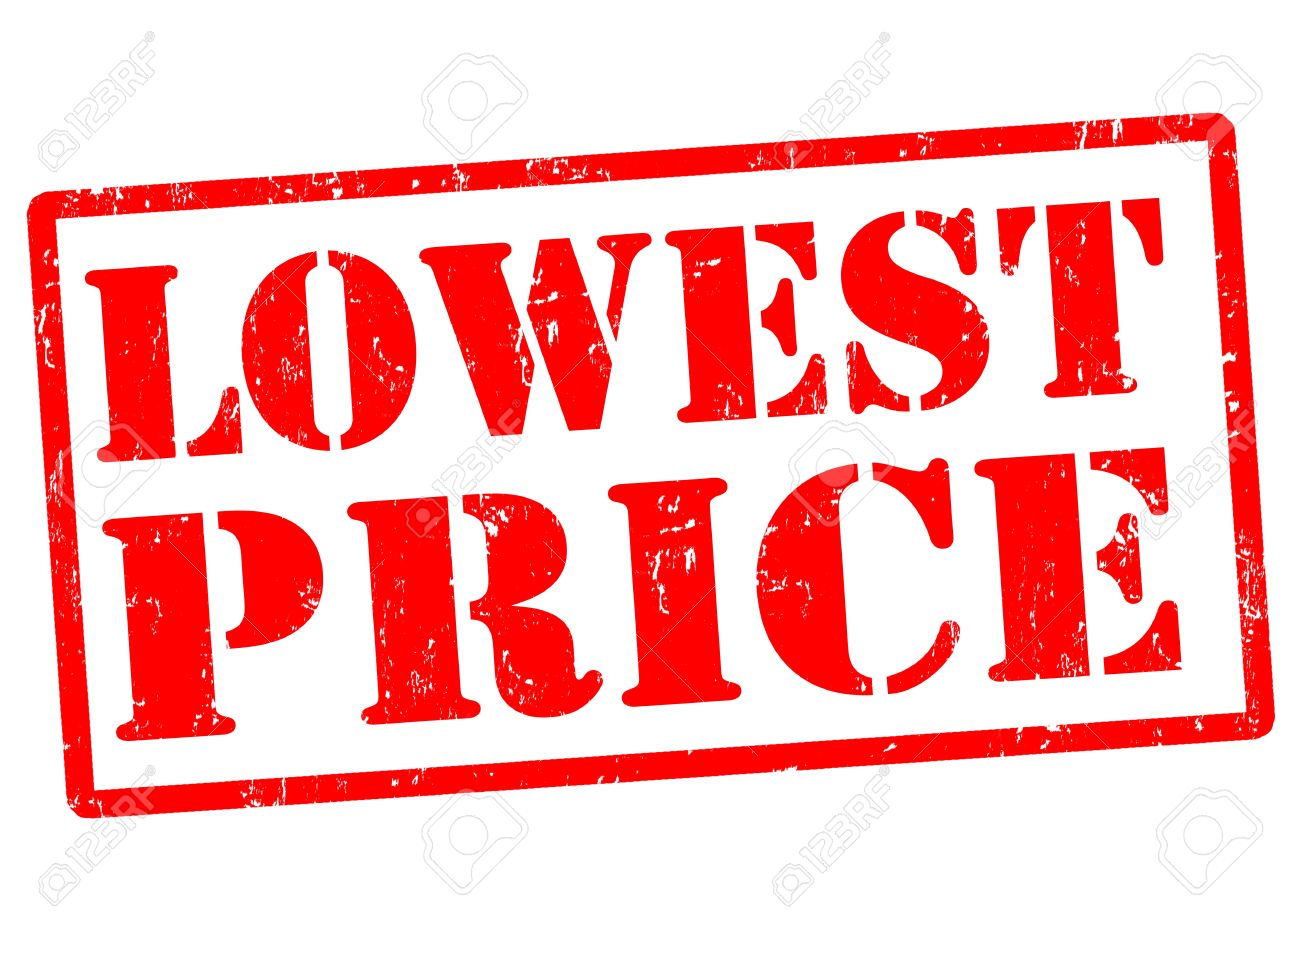  Lowest Price